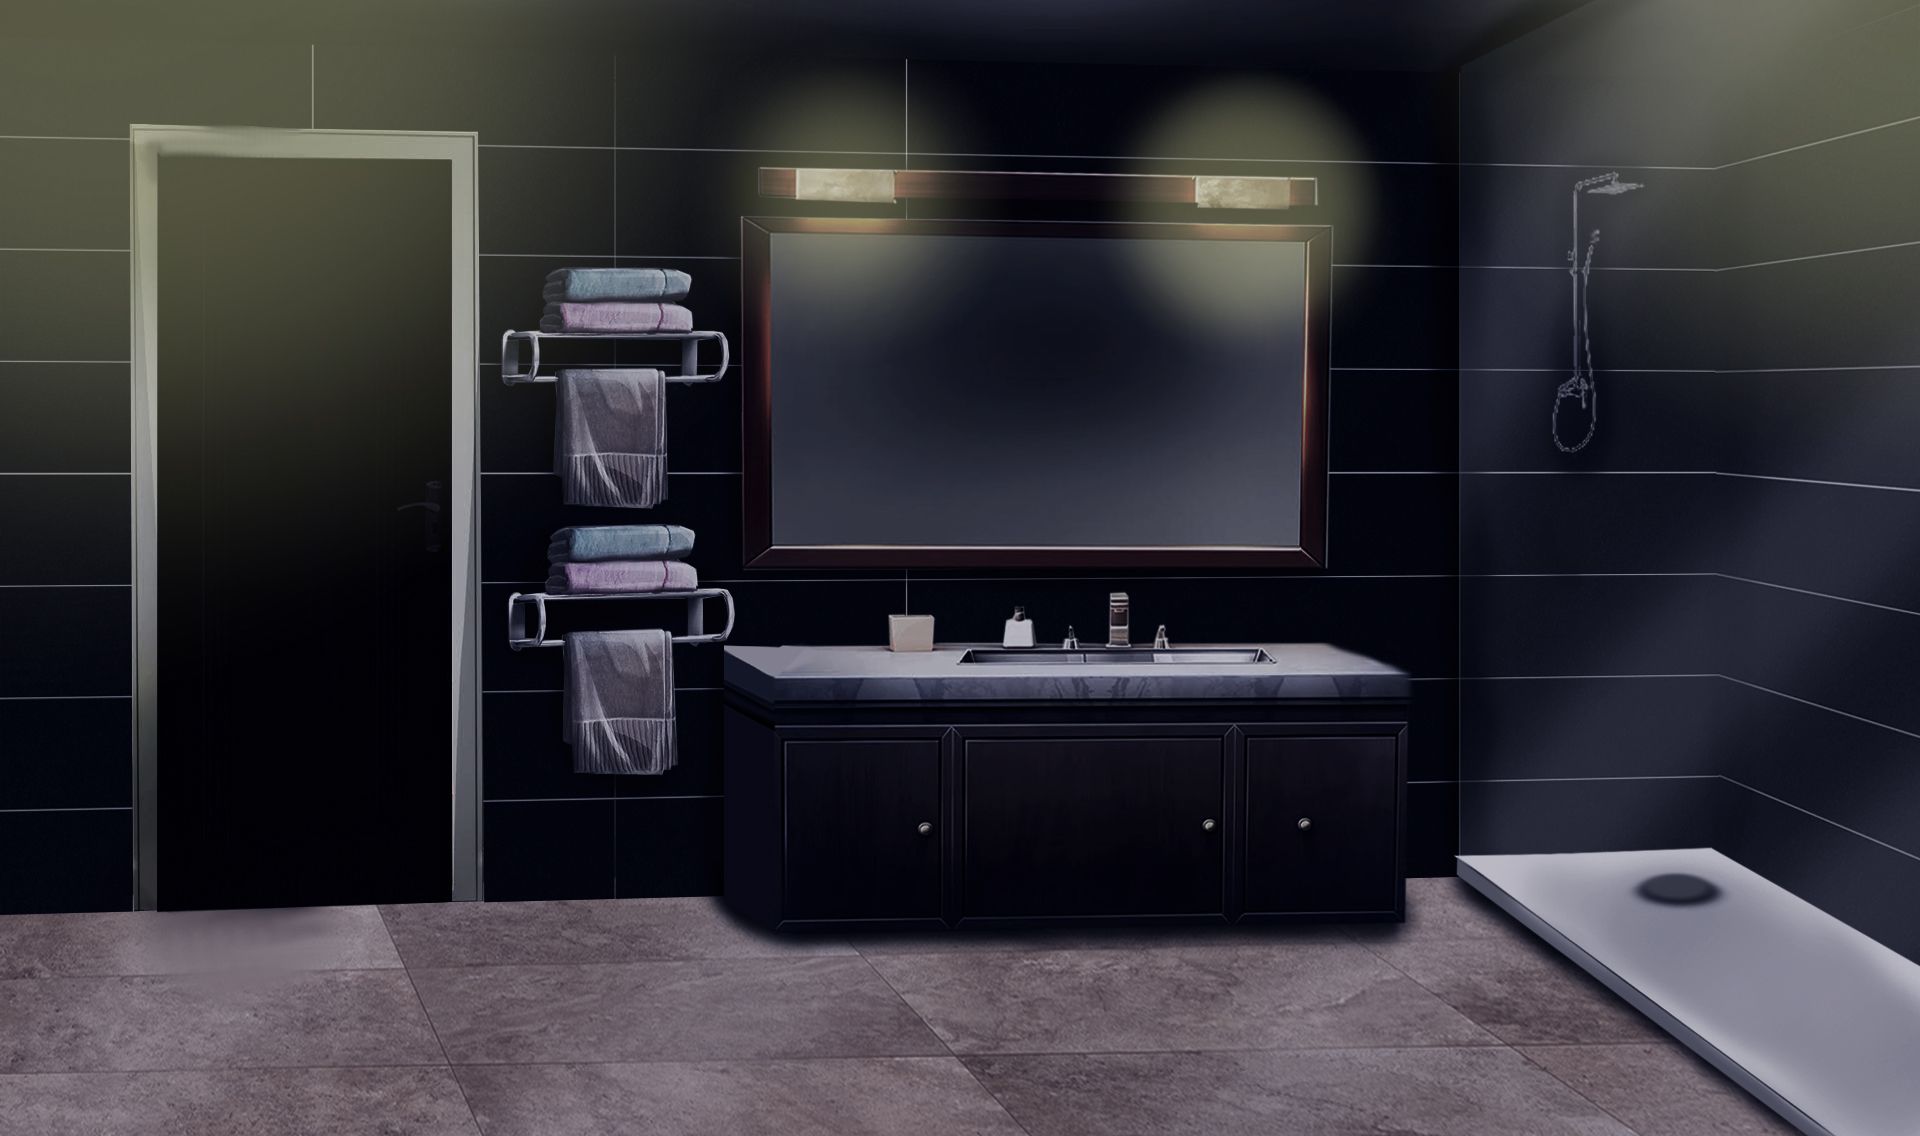 Background Bathrooms ideas. episode interactive background, episode background, anime background